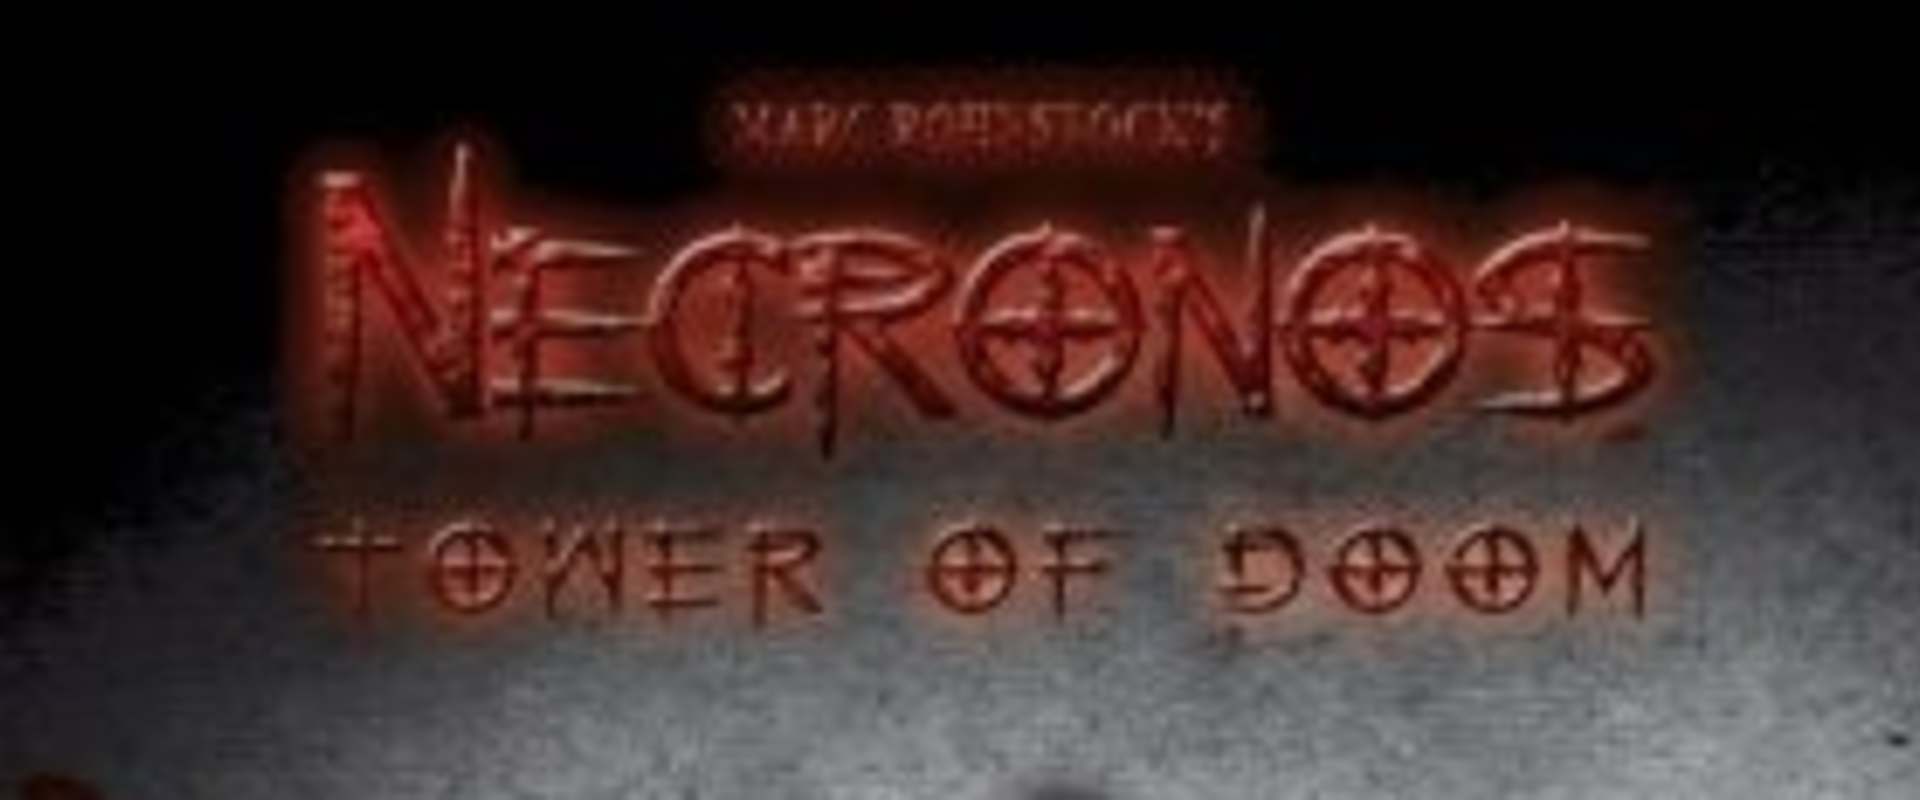 Necronos: Tower of Doom background 2